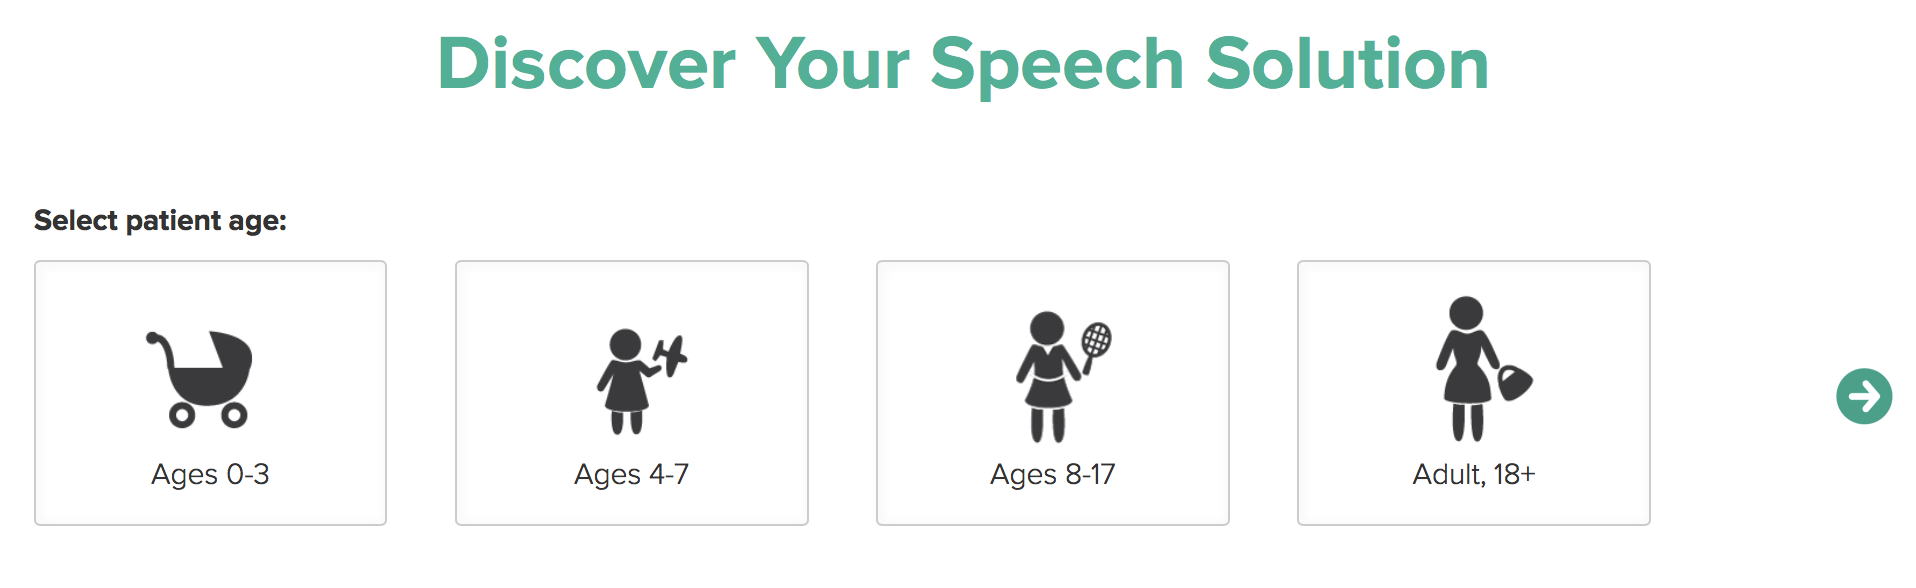 Find your speech solution